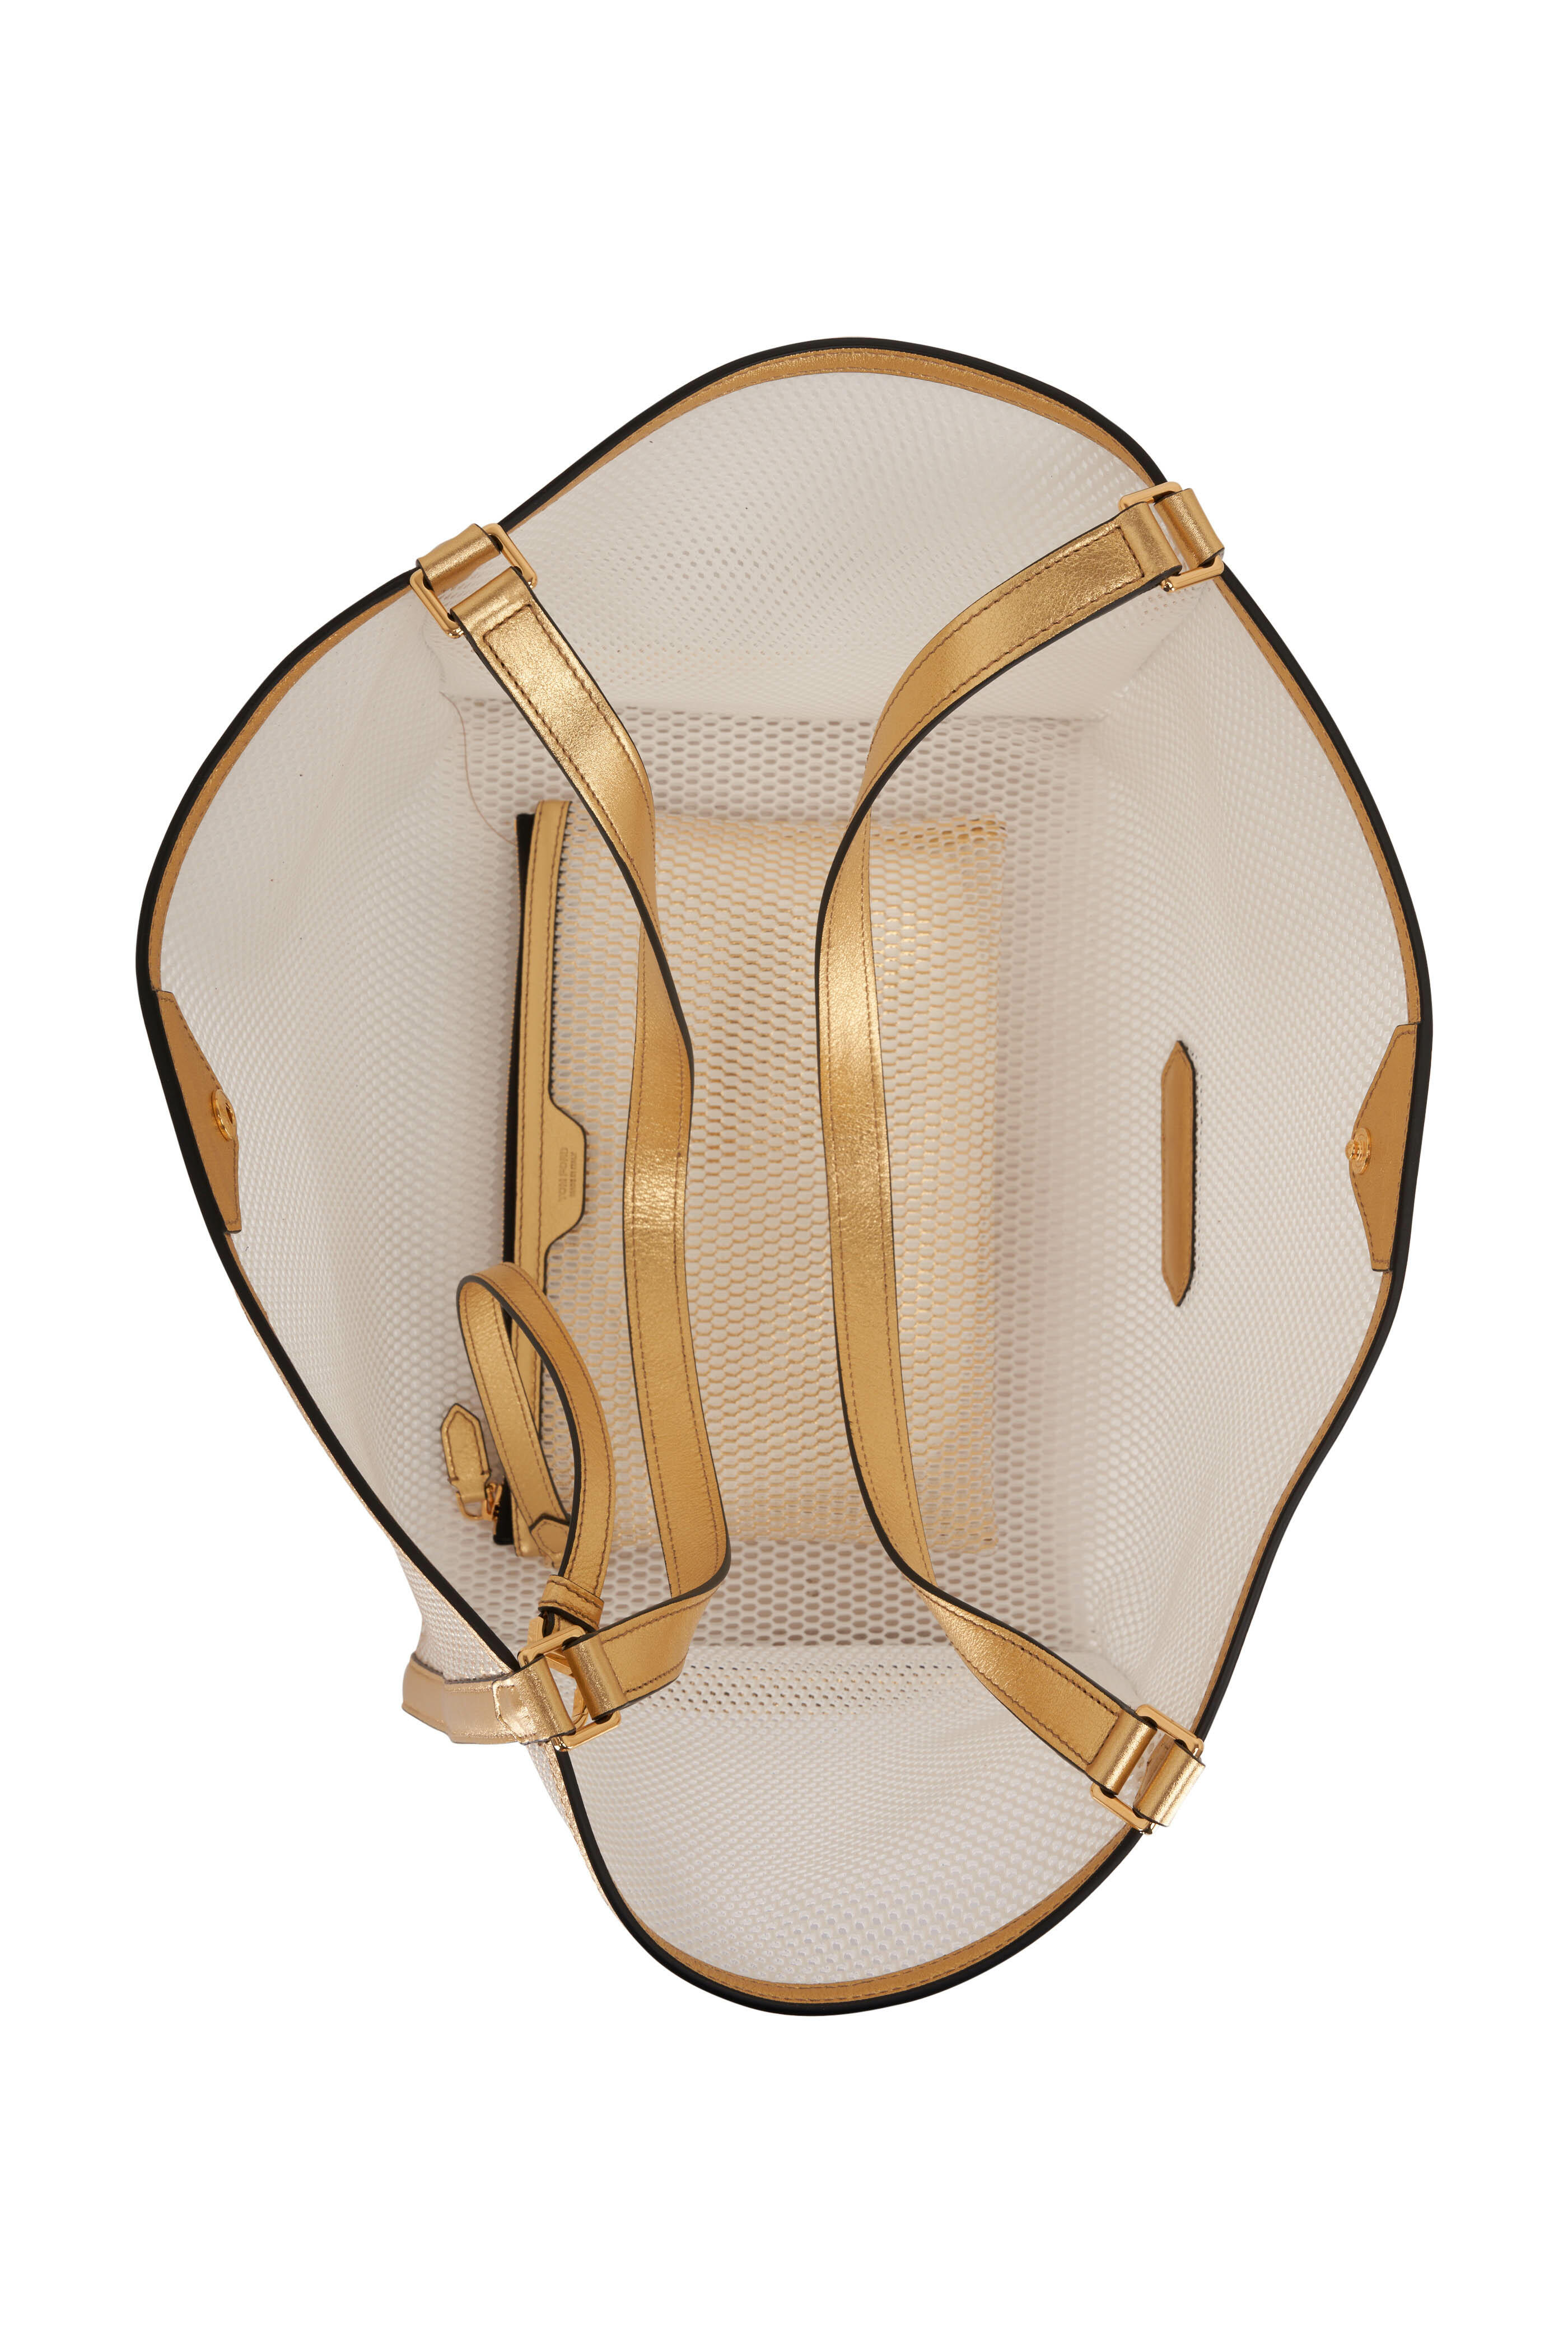 Tom Ford, Bags, Tom Ford Metallic Gold Ombre Plexiglass Minaudiere Clutch